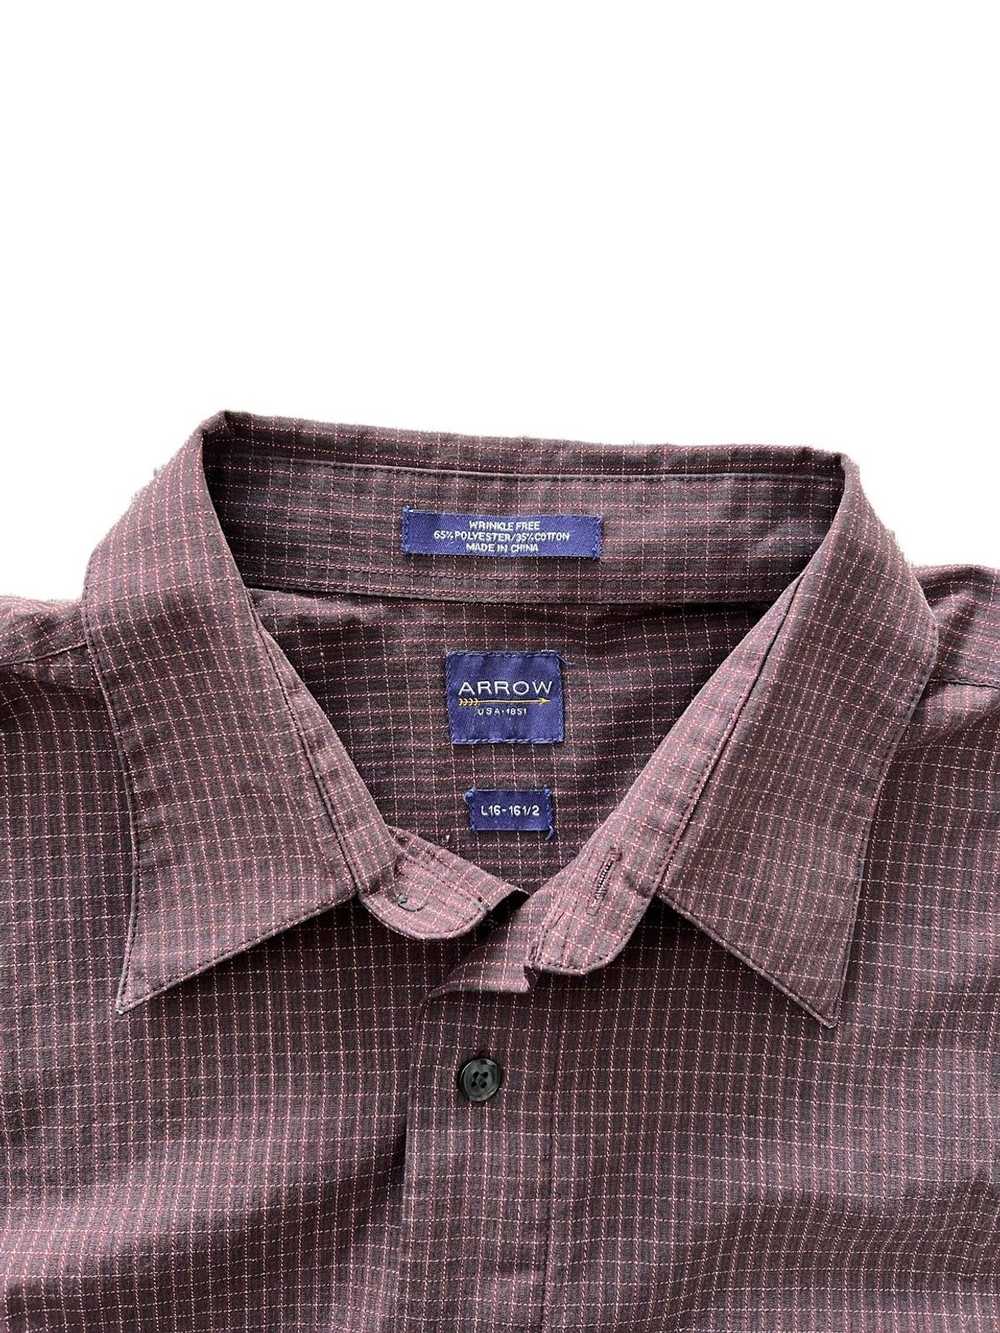 Arrow Brown long sleeve button up shirt - image 4